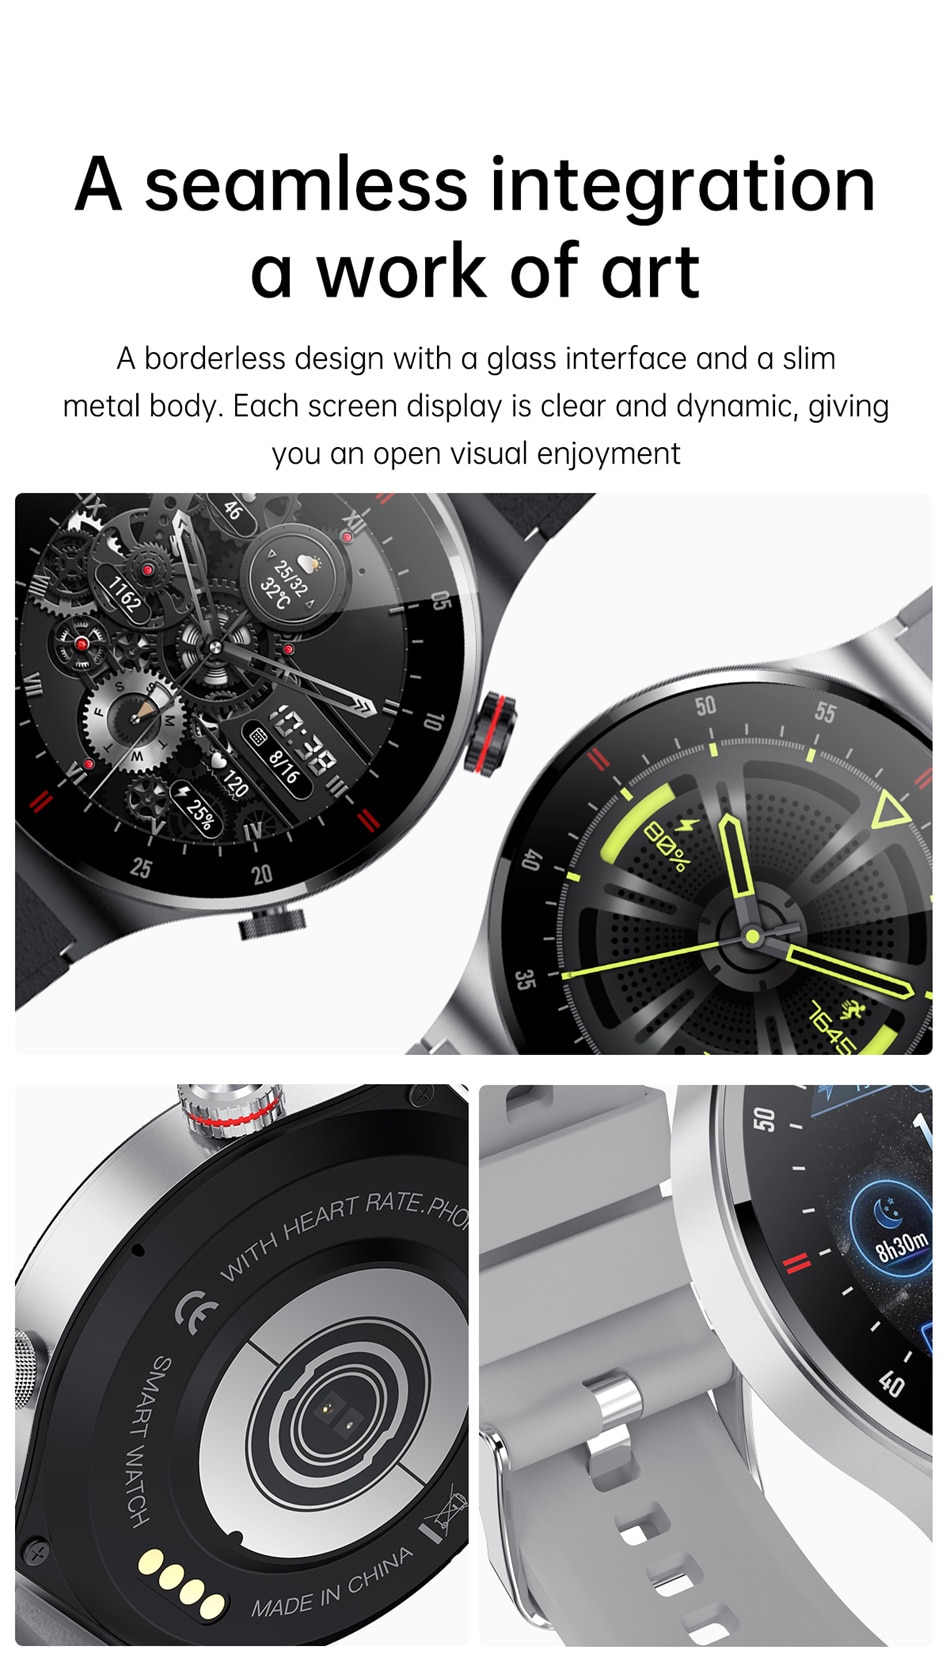 2022 New Bluetooth Call Smart Watch Men Sports Fitness Tracker Waterproof Smartwatch Large HD screen for huawei Xiaomi phone+box